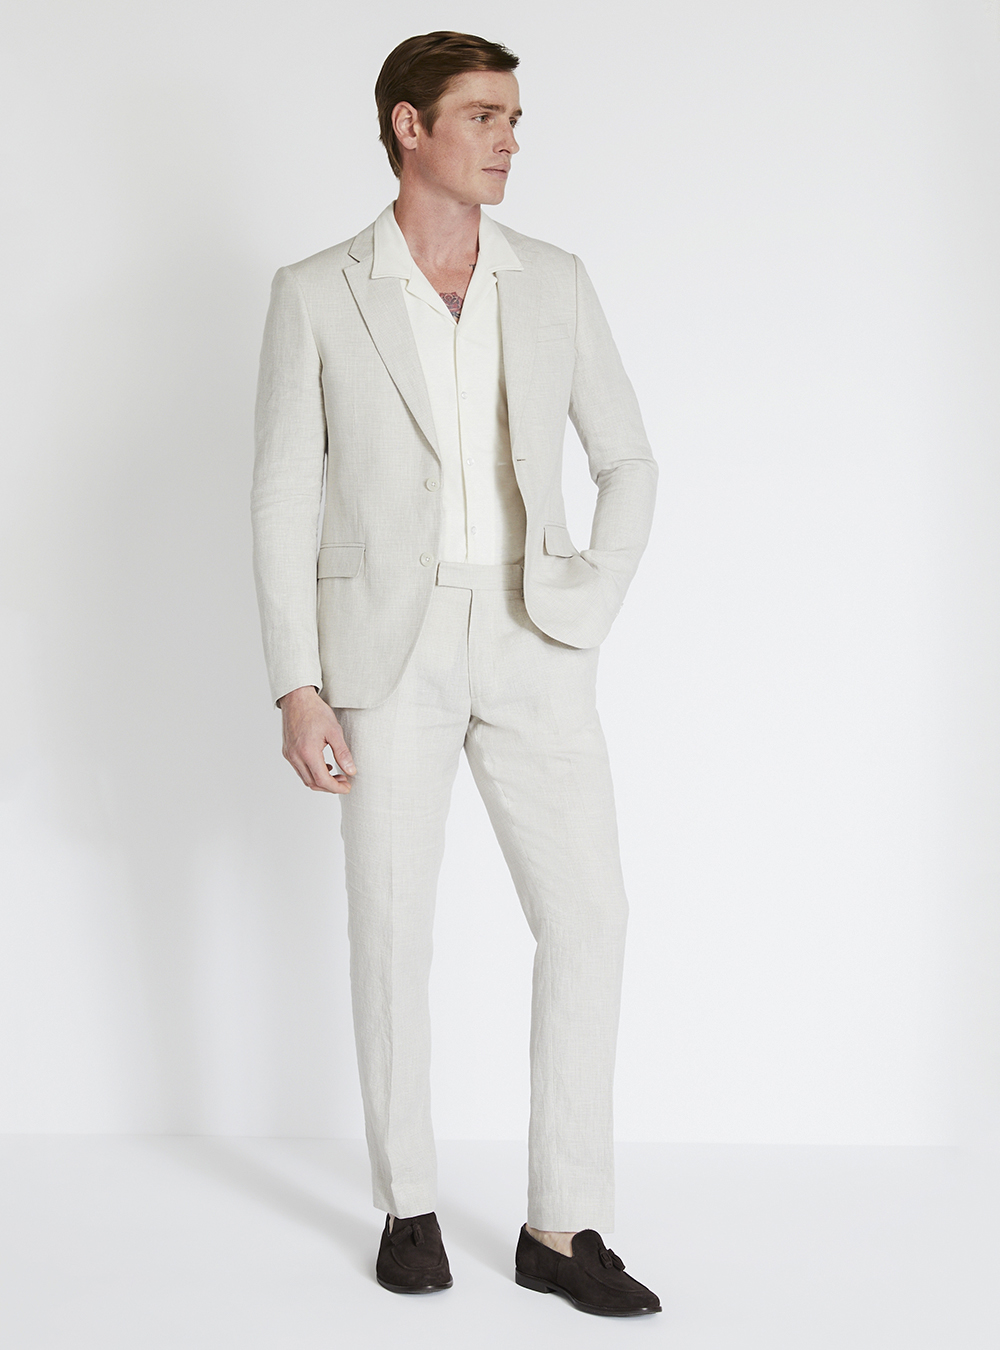 88 Classic & Contemporary Suit Outfit Ideas for Men - Suits Expert